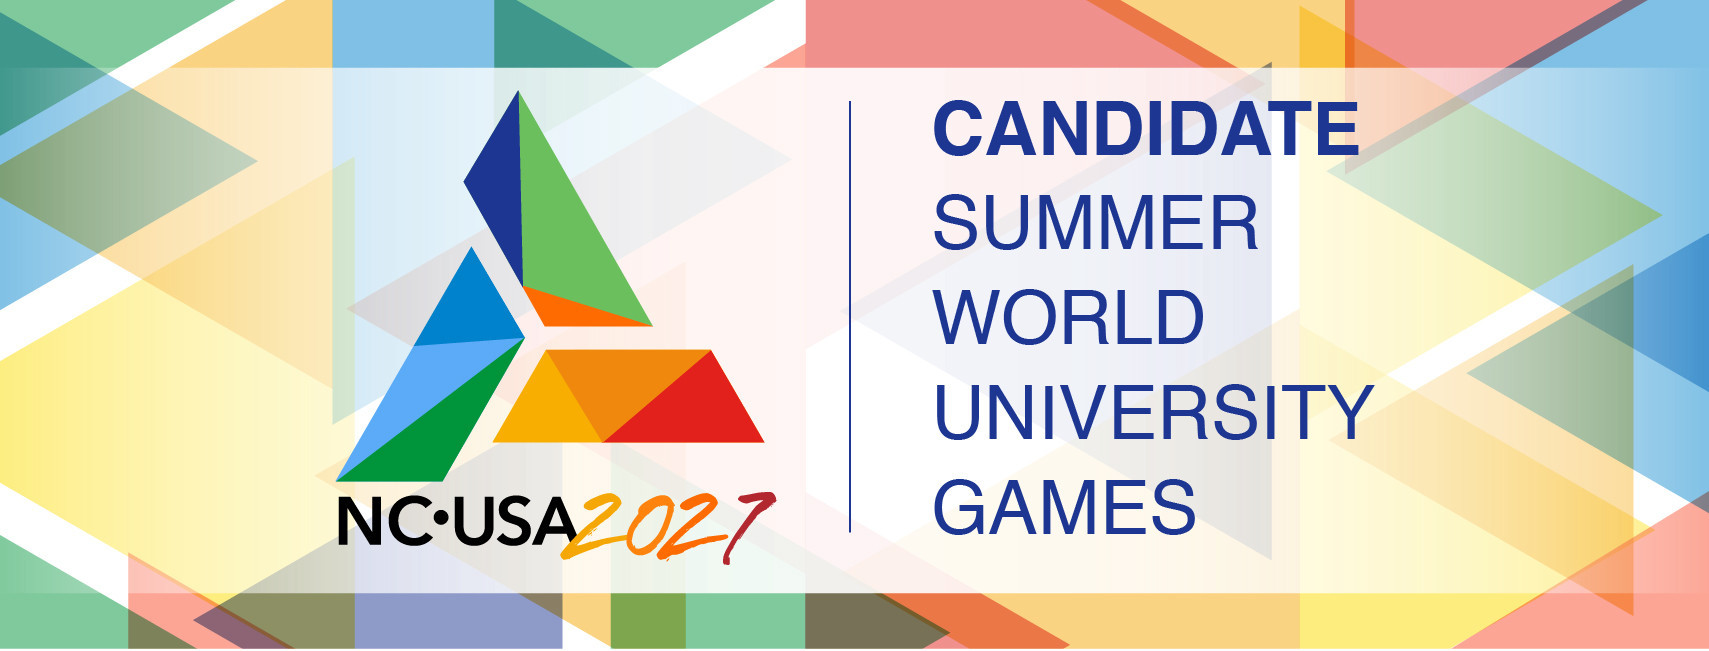 North Carolina promises "world-class experience" if awarded 2027 Summer World University Games